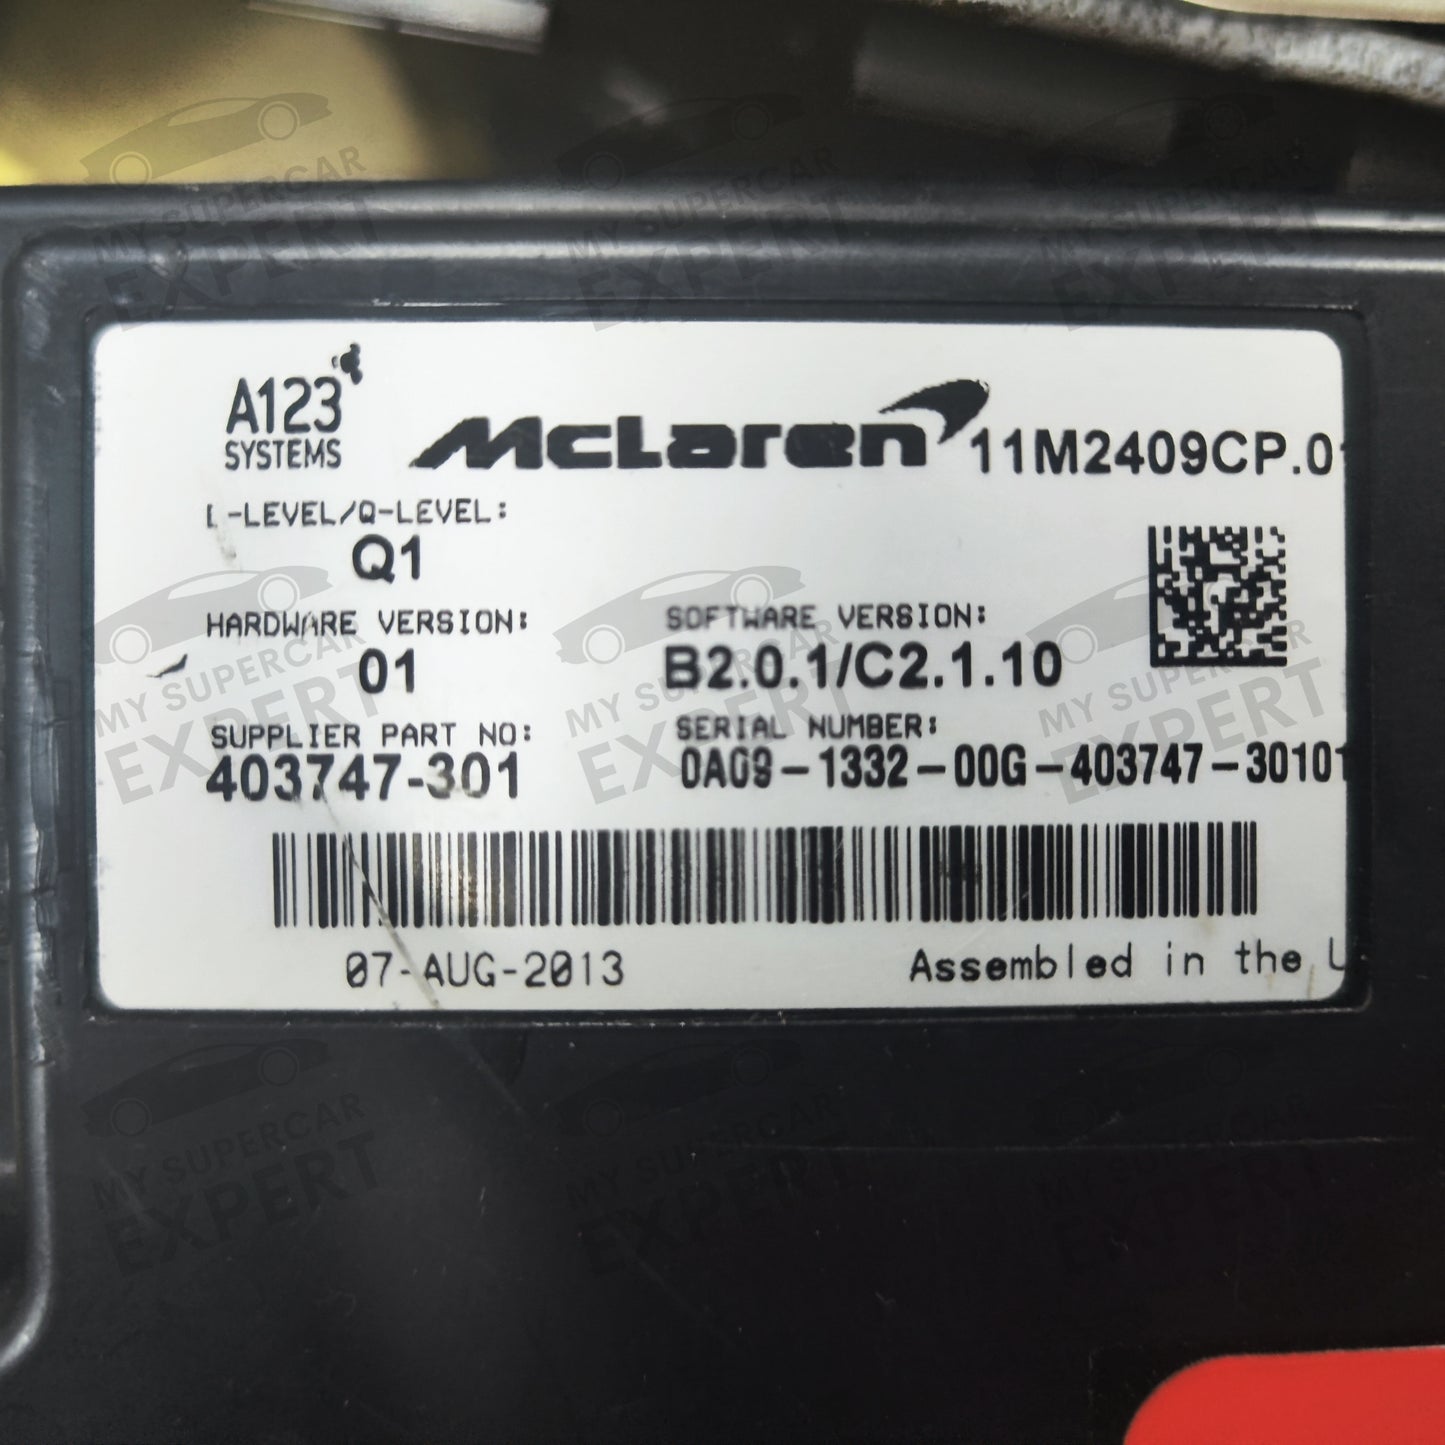 McLaren MP4-12C 625C 650S 675LT  P1 2011-2017 Gen 1 Lithium Battery 762.96Wh 5.78Ah 11M1920CP refurbished